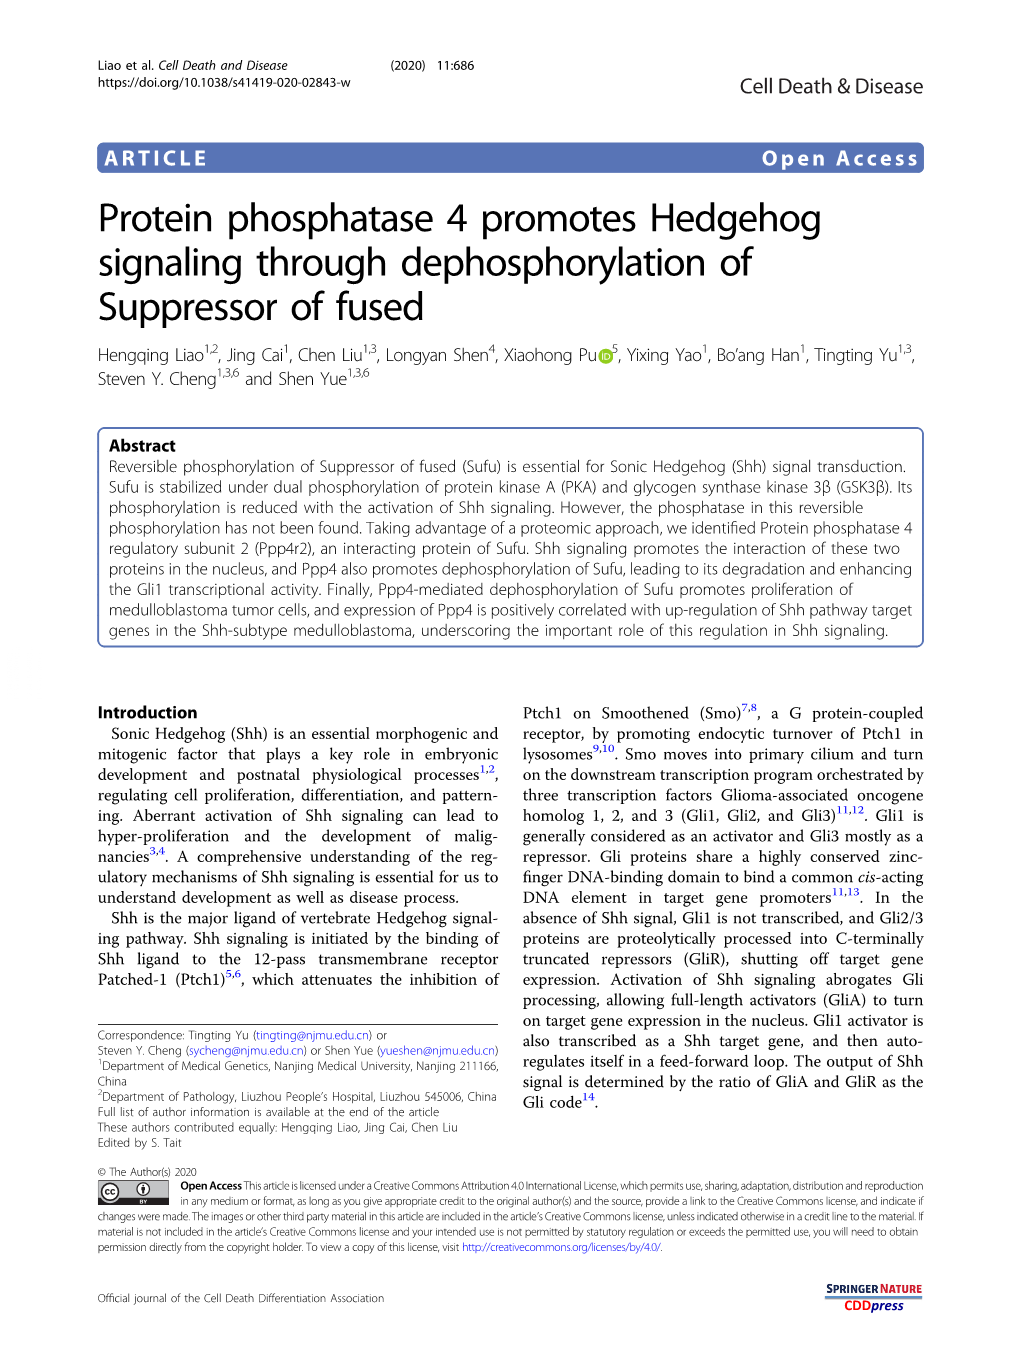 Protein Phosphatase 4 Promotes Hedgehog Signaling